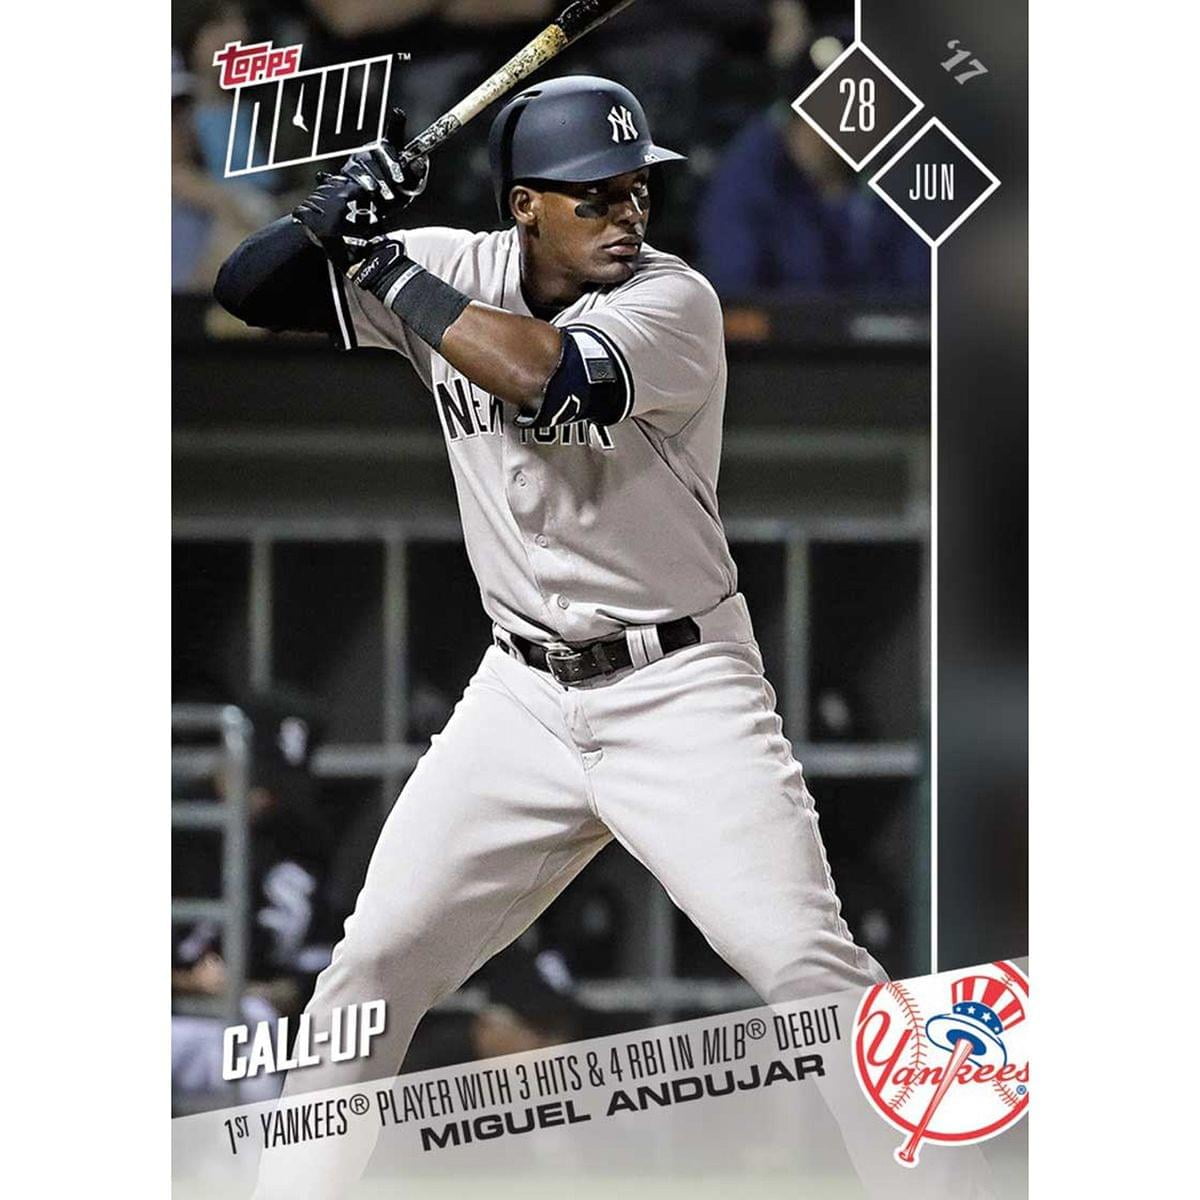 2019 Topps Miguel Andujar Yankees Rookie Cup Baseball Card #132 PSA 10 Gem Mint 